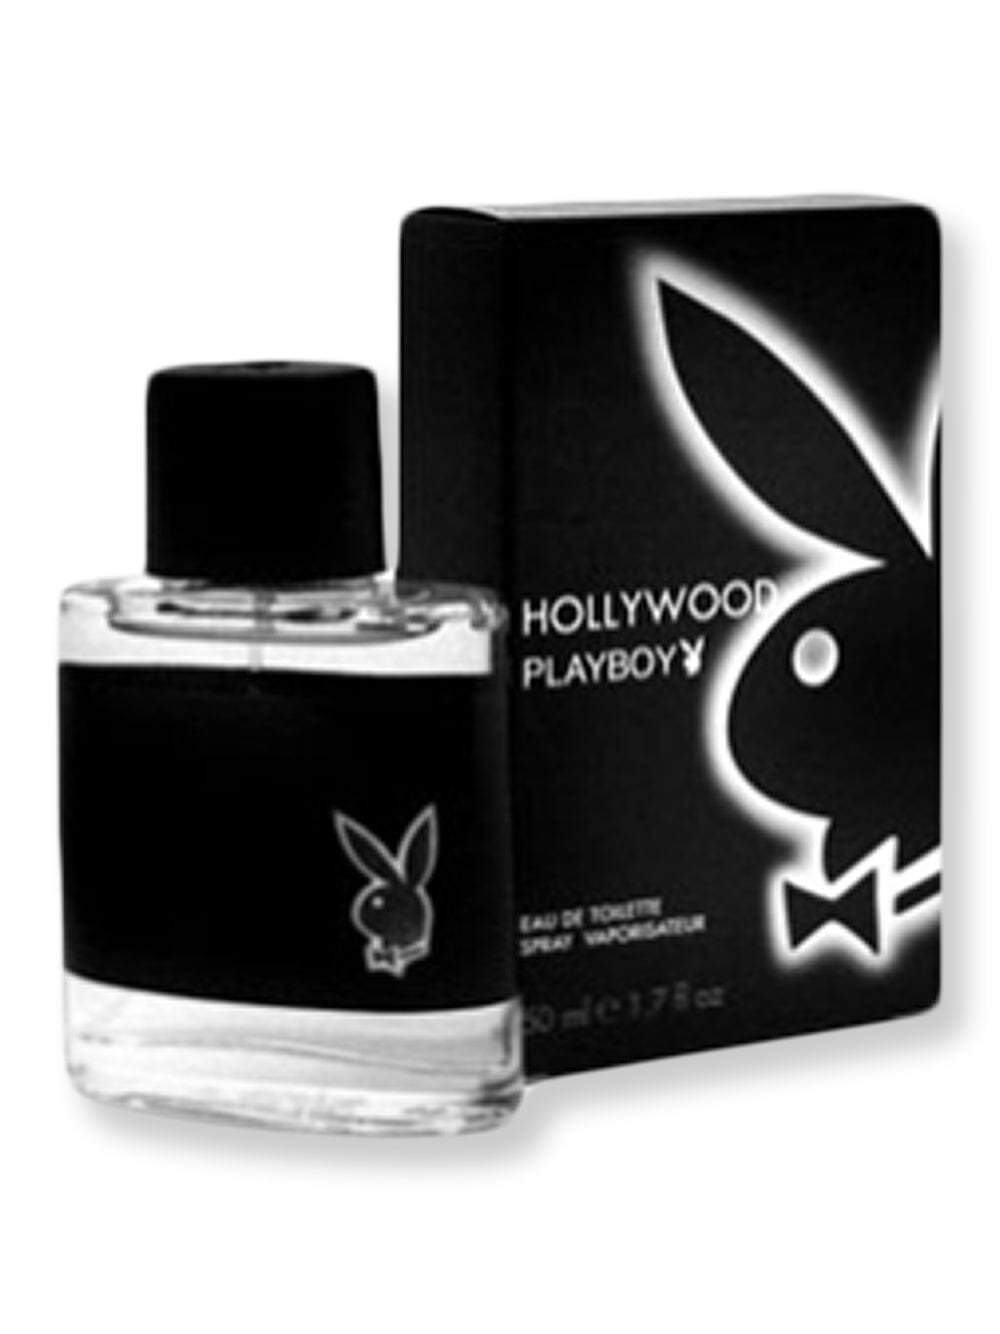 Playboy Playboy Hollywood EDT Spray 1.7 oz50 ml Perfume 